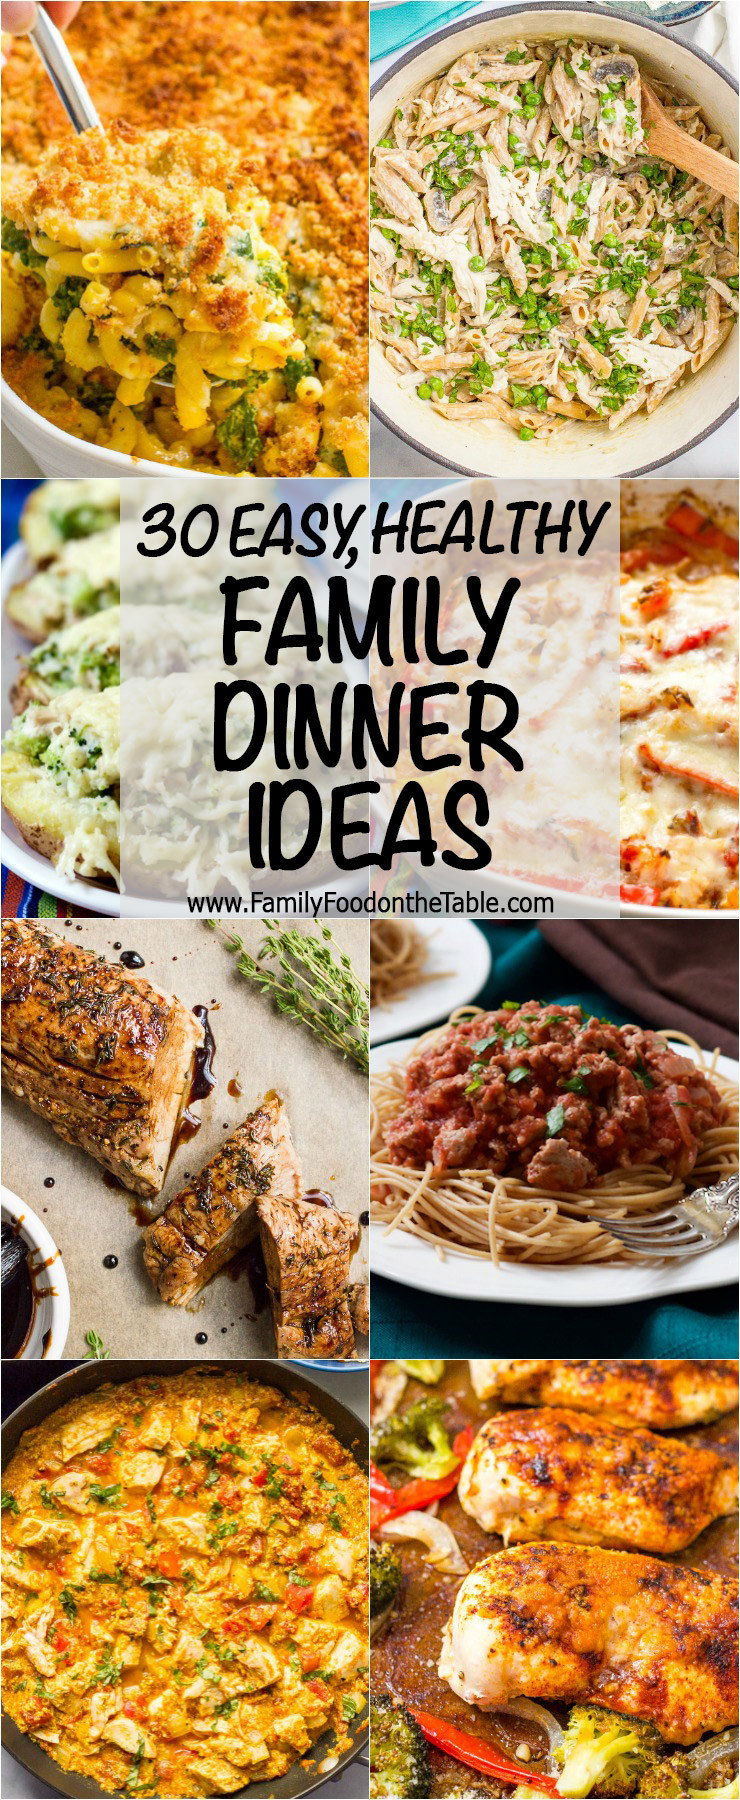 Dinner Ideas For Families
 30 easy healthy family dinner ideas Family Food on the Table